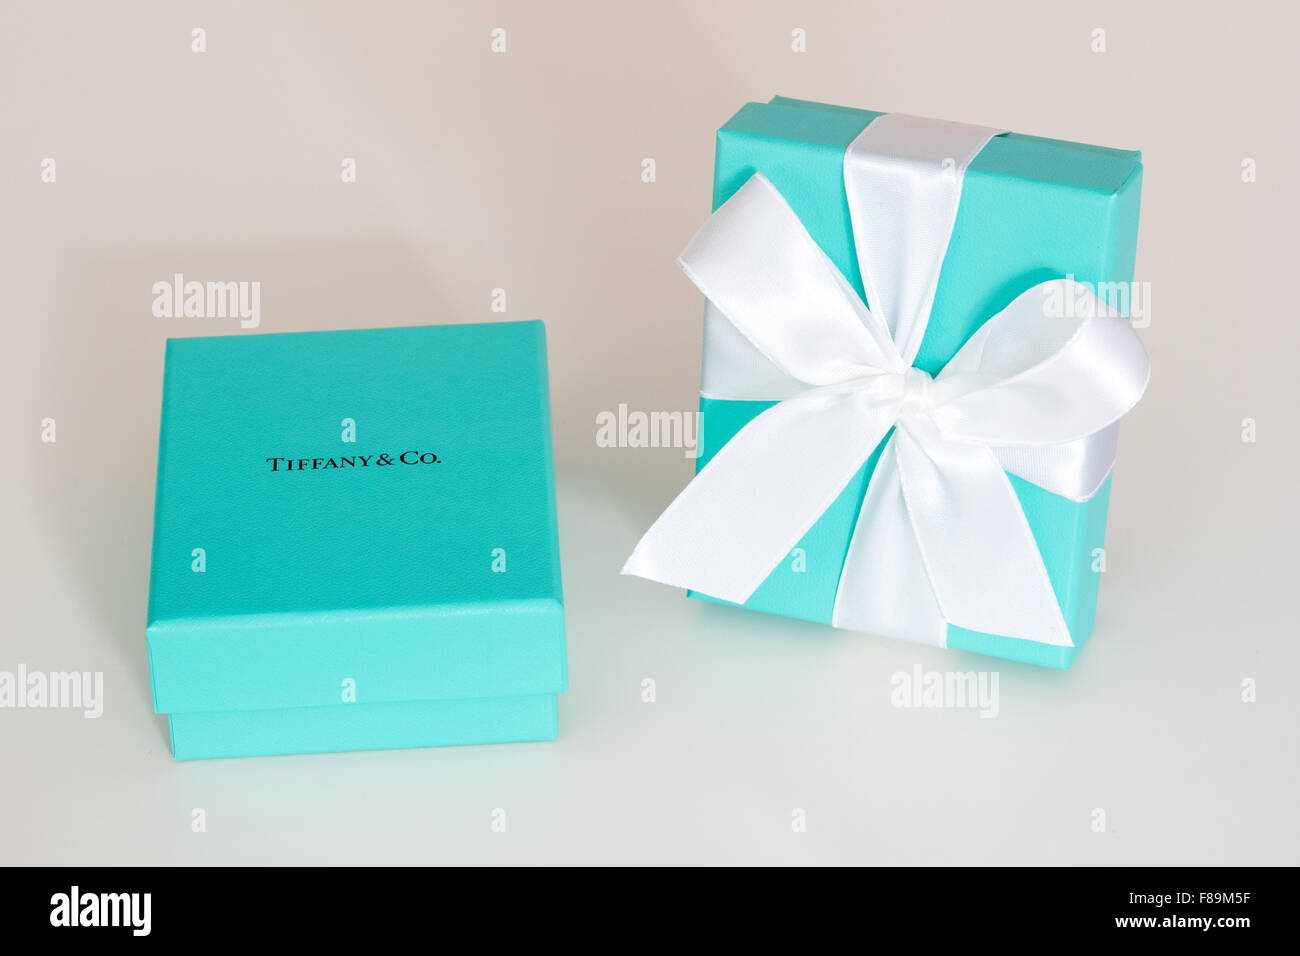 A Tiffany Blue Box (little blue box from Tiffany) from Tiffany & Co., the famous New York City jewelry company. Stock Photo